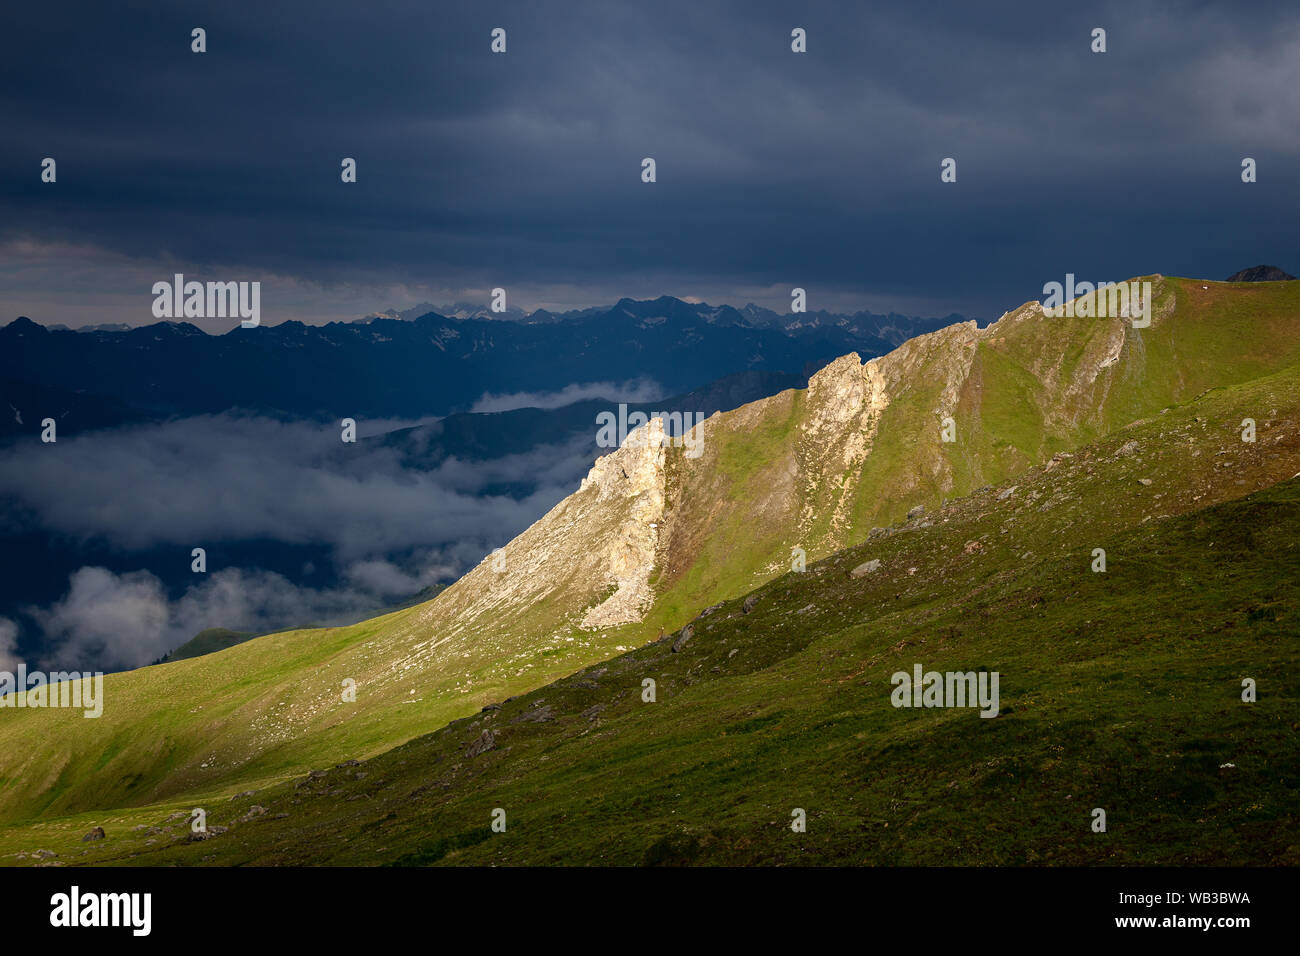 Sunlight on mountains. Evocative mountain landscape, dark cloudy sky. Glocknergruppe massif. Austrian Alps. Stock Photo